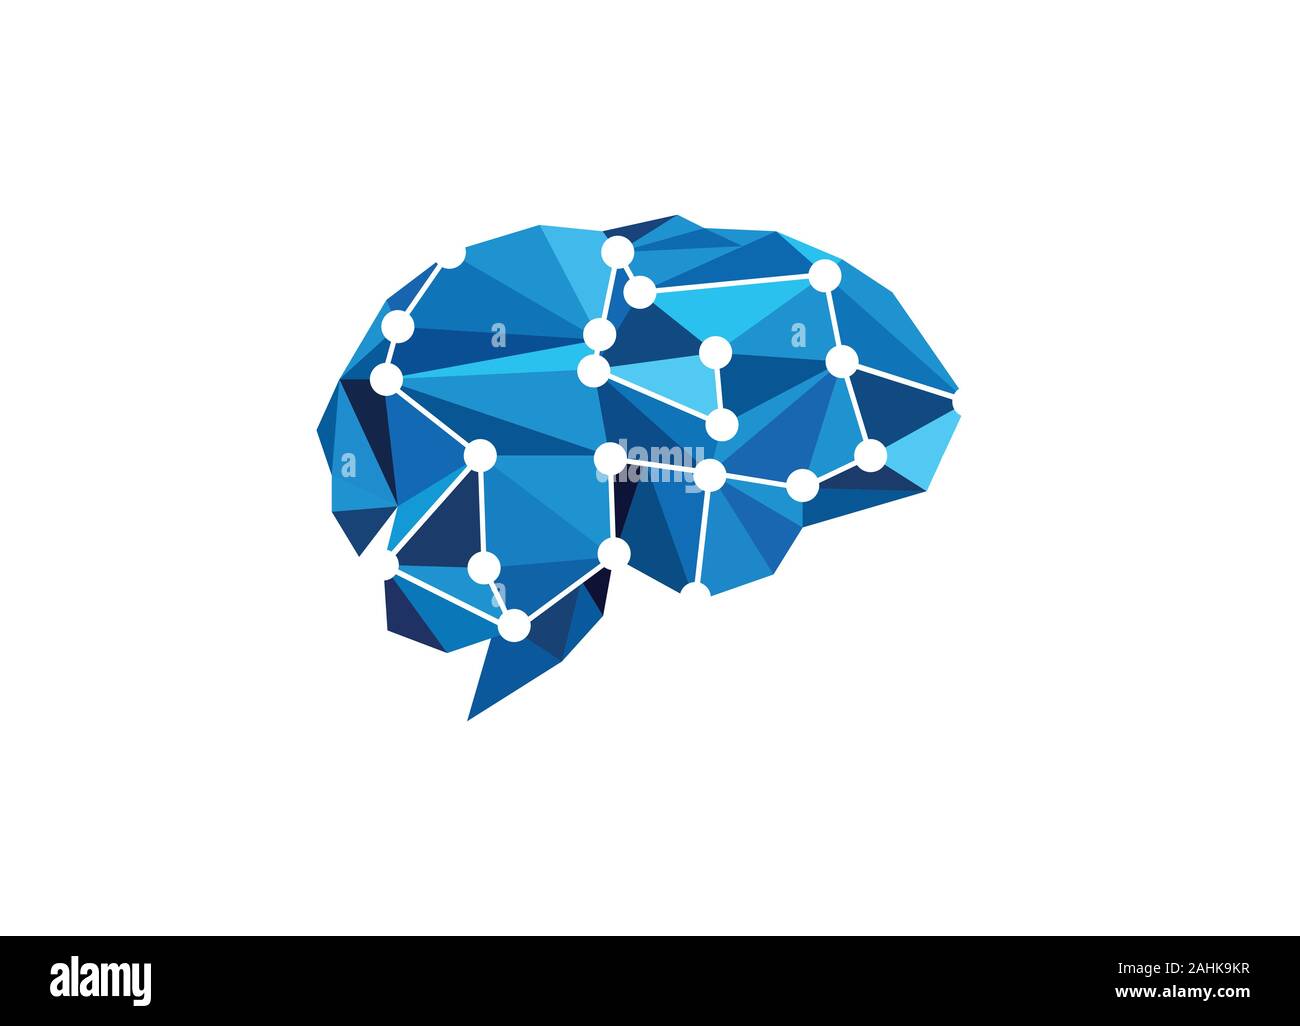 Brain Logo Ideas: Make Your Own Brain Logo - Looka